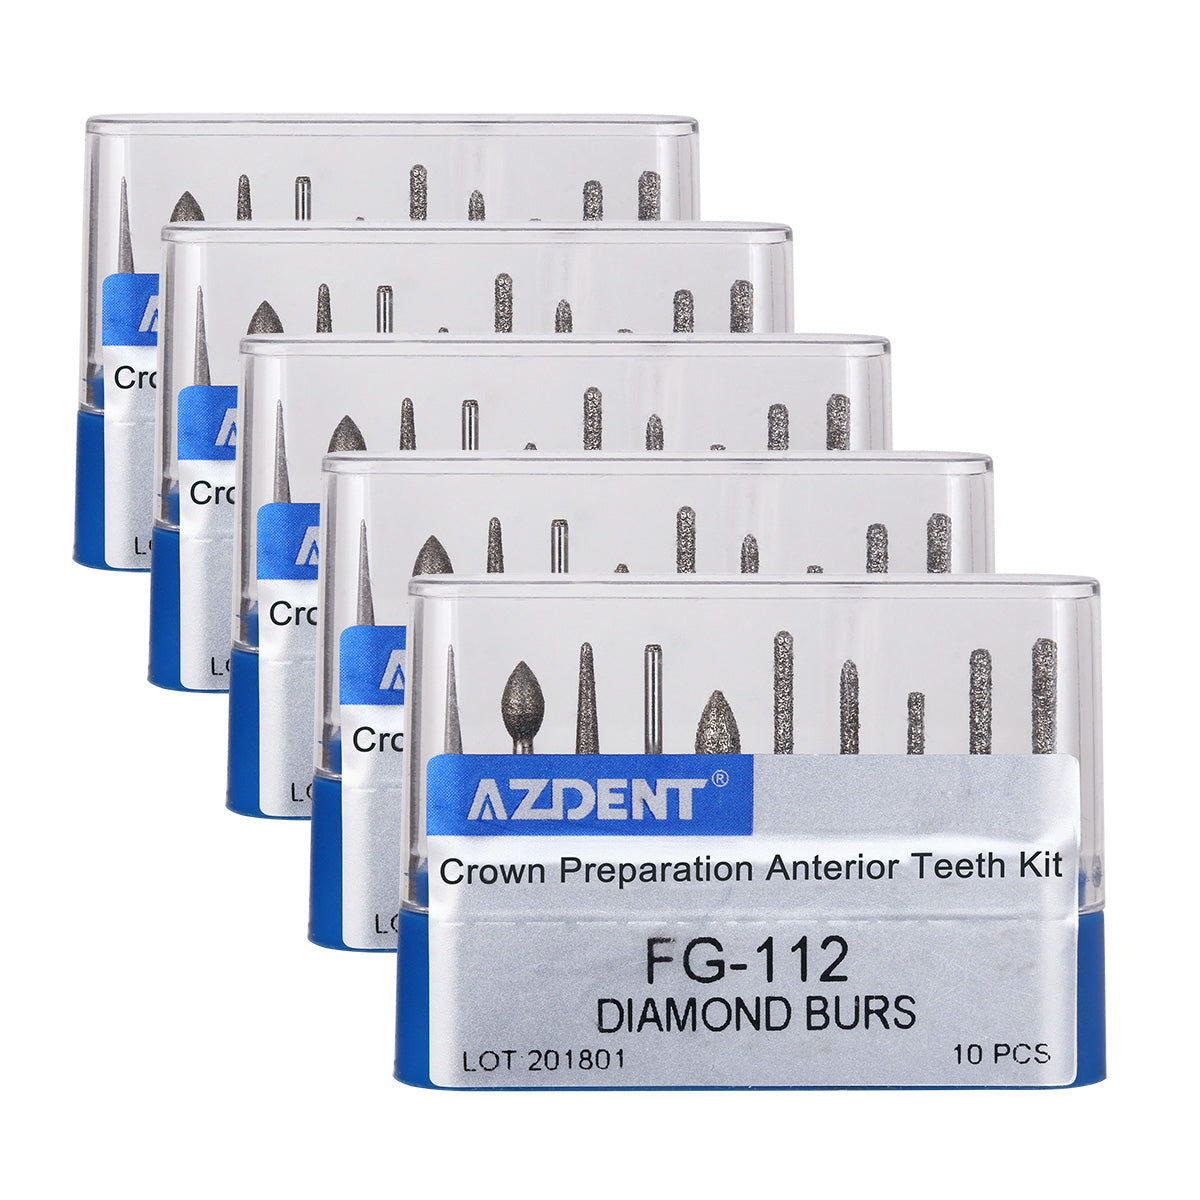 5 Kits AZDENT Dental Diamond Bur FG-112 Crown Preparation Anterior Teeth Kit 10pcs/Kit - azdentall.com